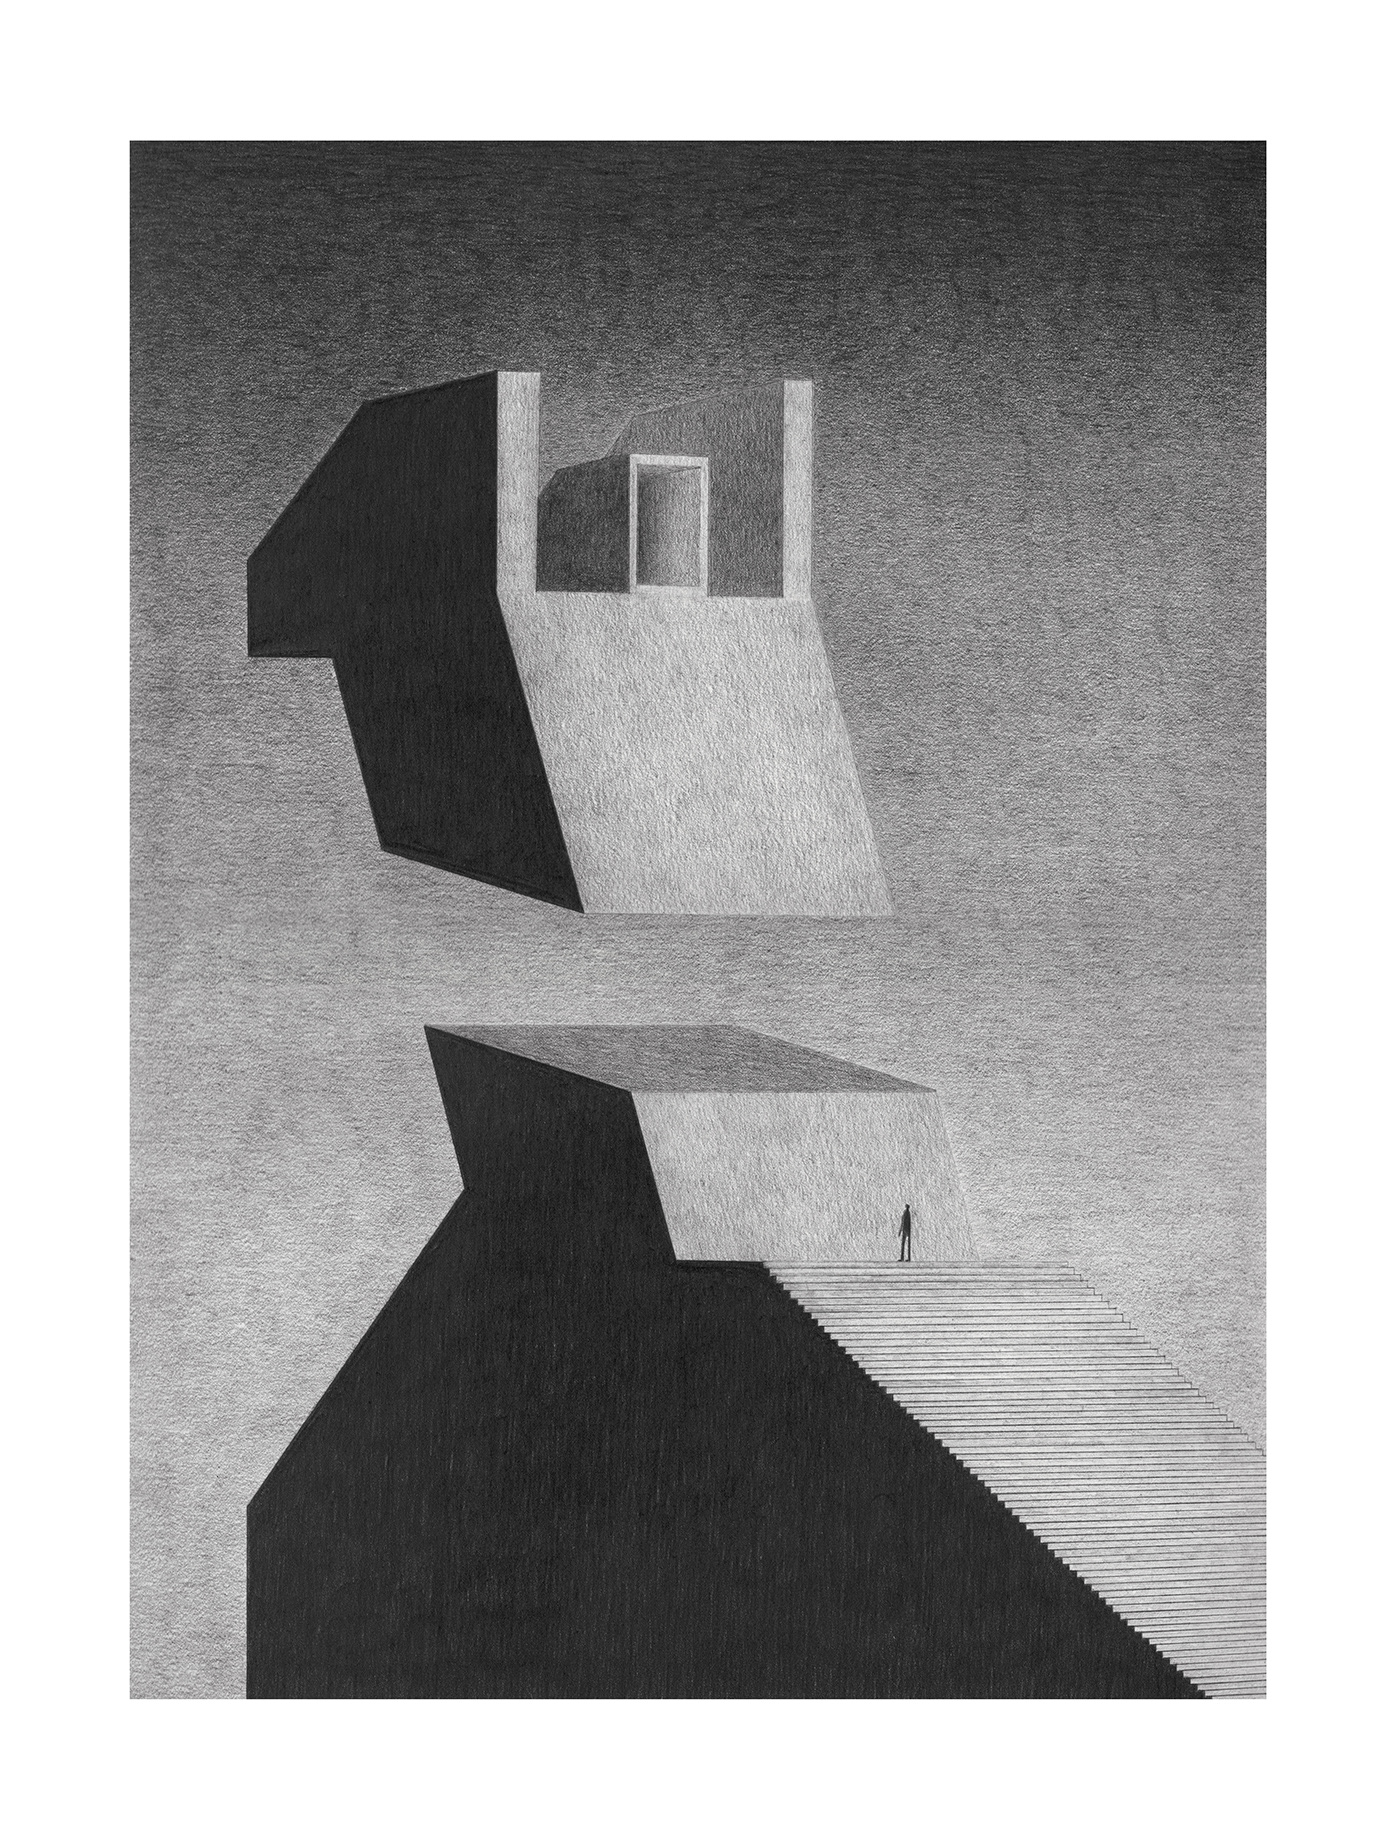 architecture black and white book art conceptual dark surrealism james lipnickas jameslipnickas science fiction scifi art surreal art